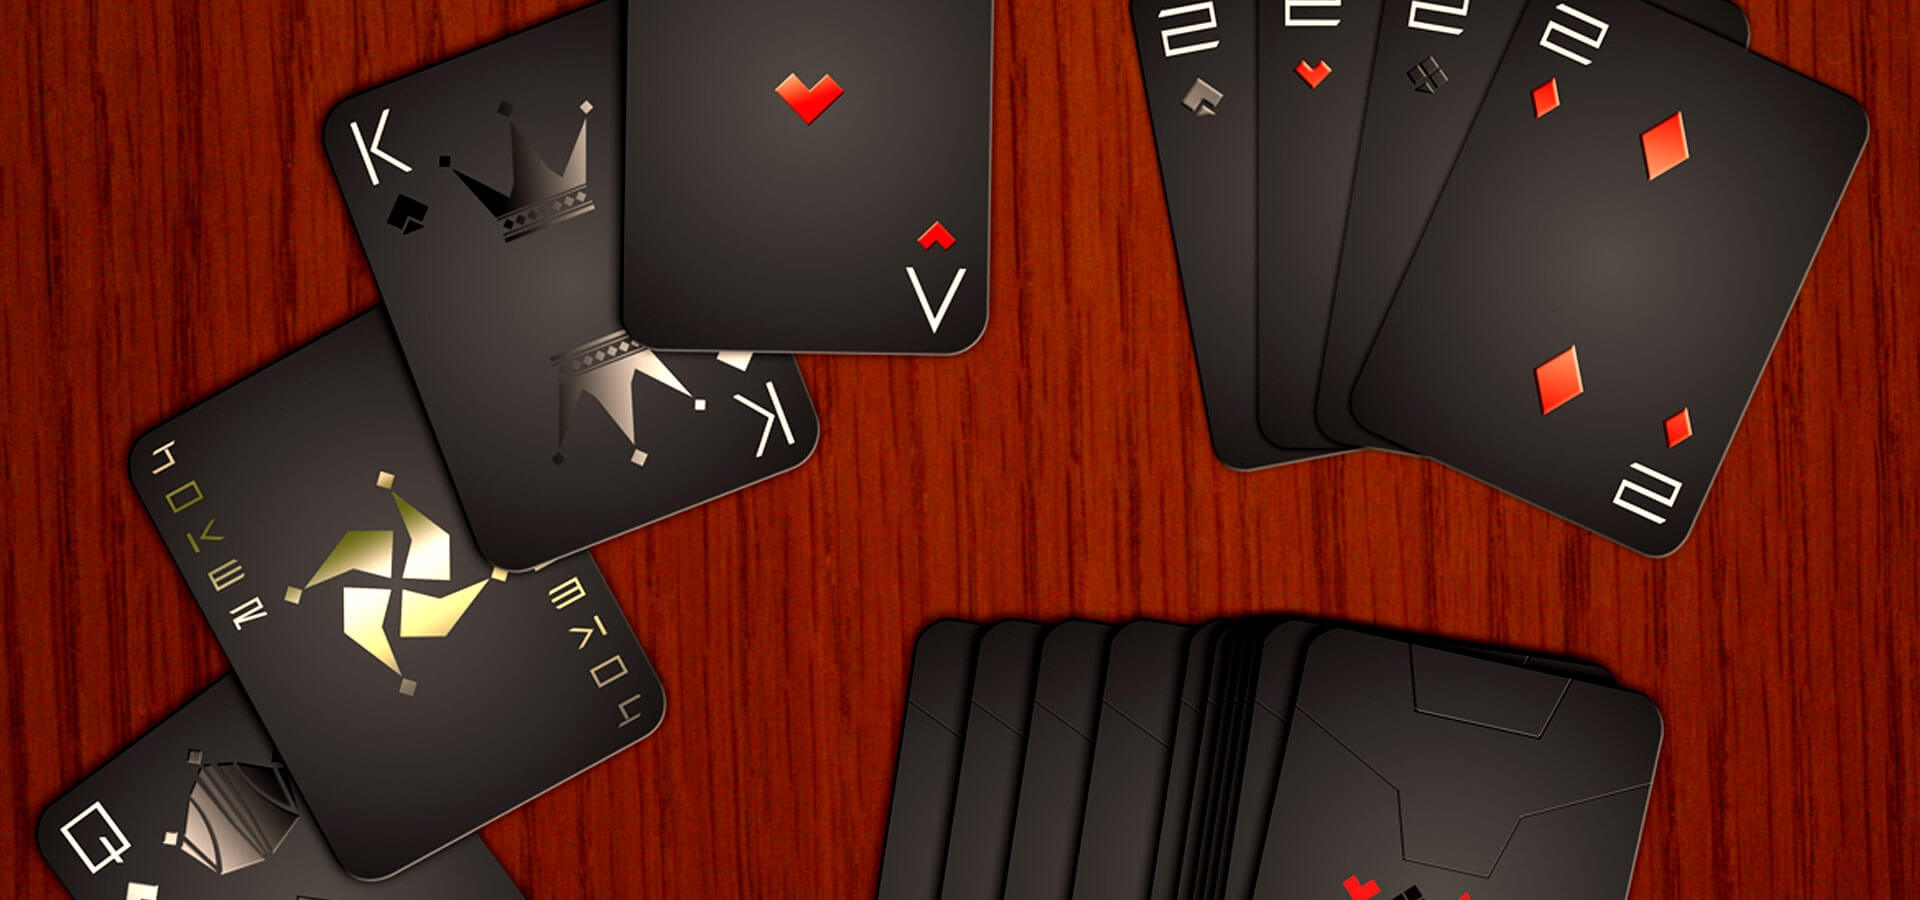 22+ Playing Card Designs | Free & Premium Templates With Regard To Playing Card Design Template